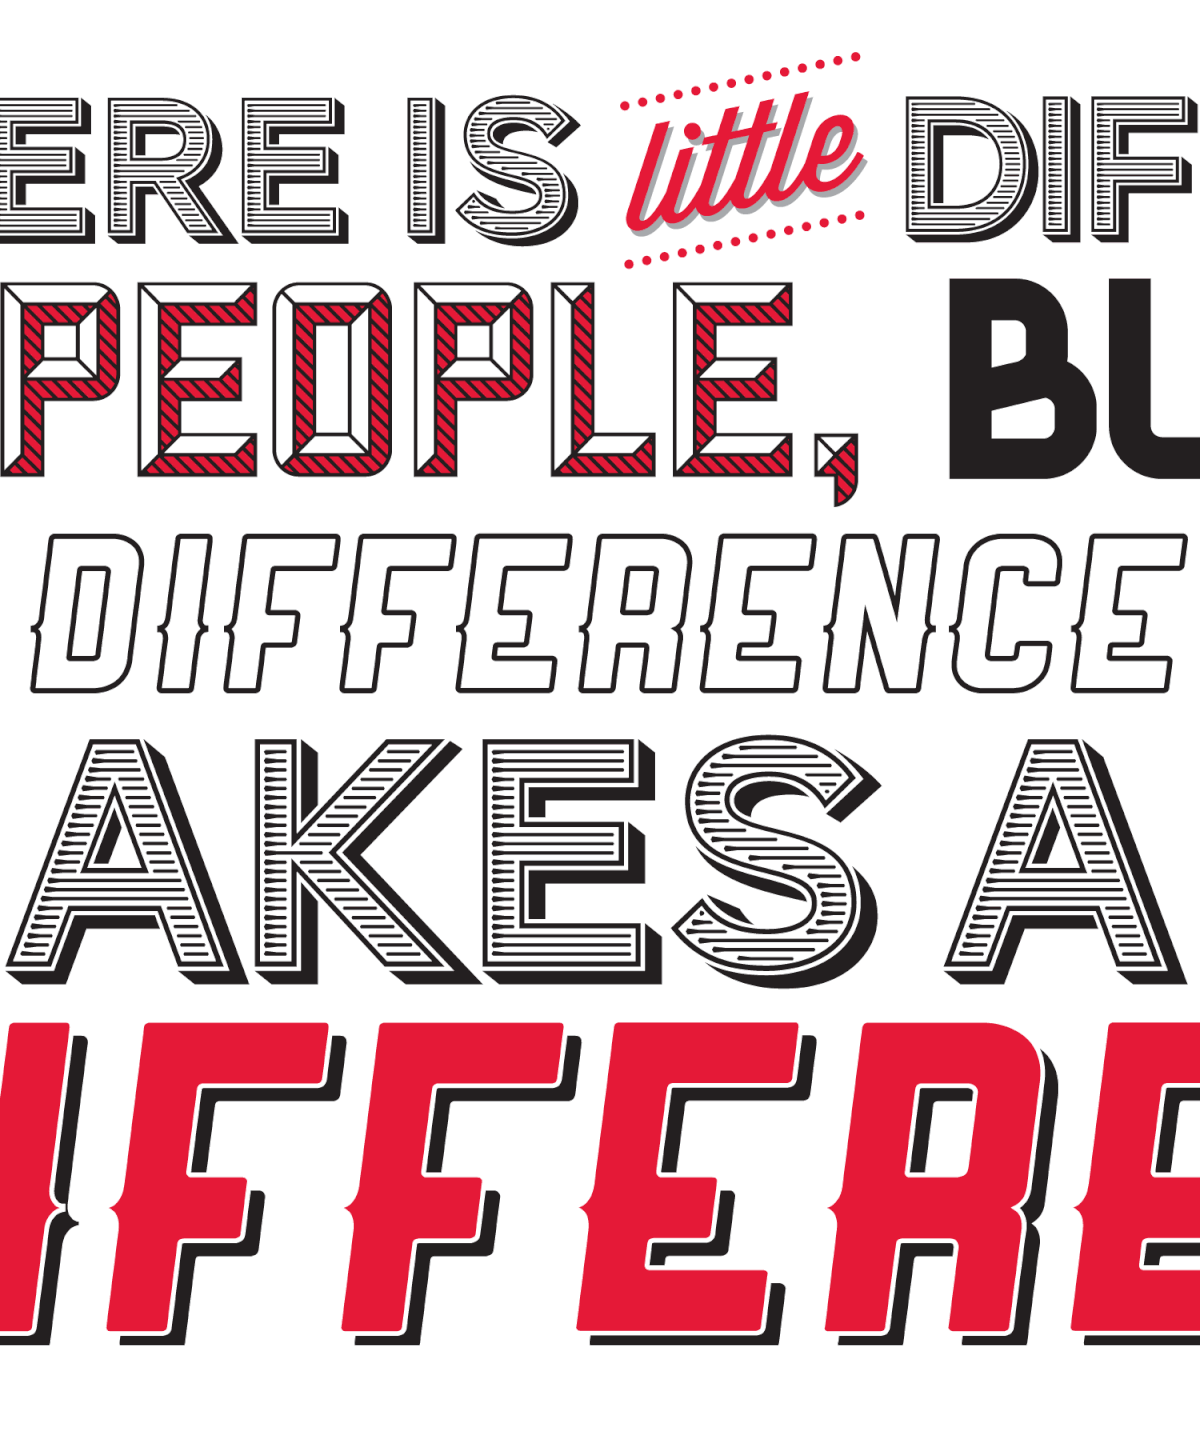 typography   type  design  Graphic  lettering   red  Black  Quotes   statemets  einstein  Illustration  typographic